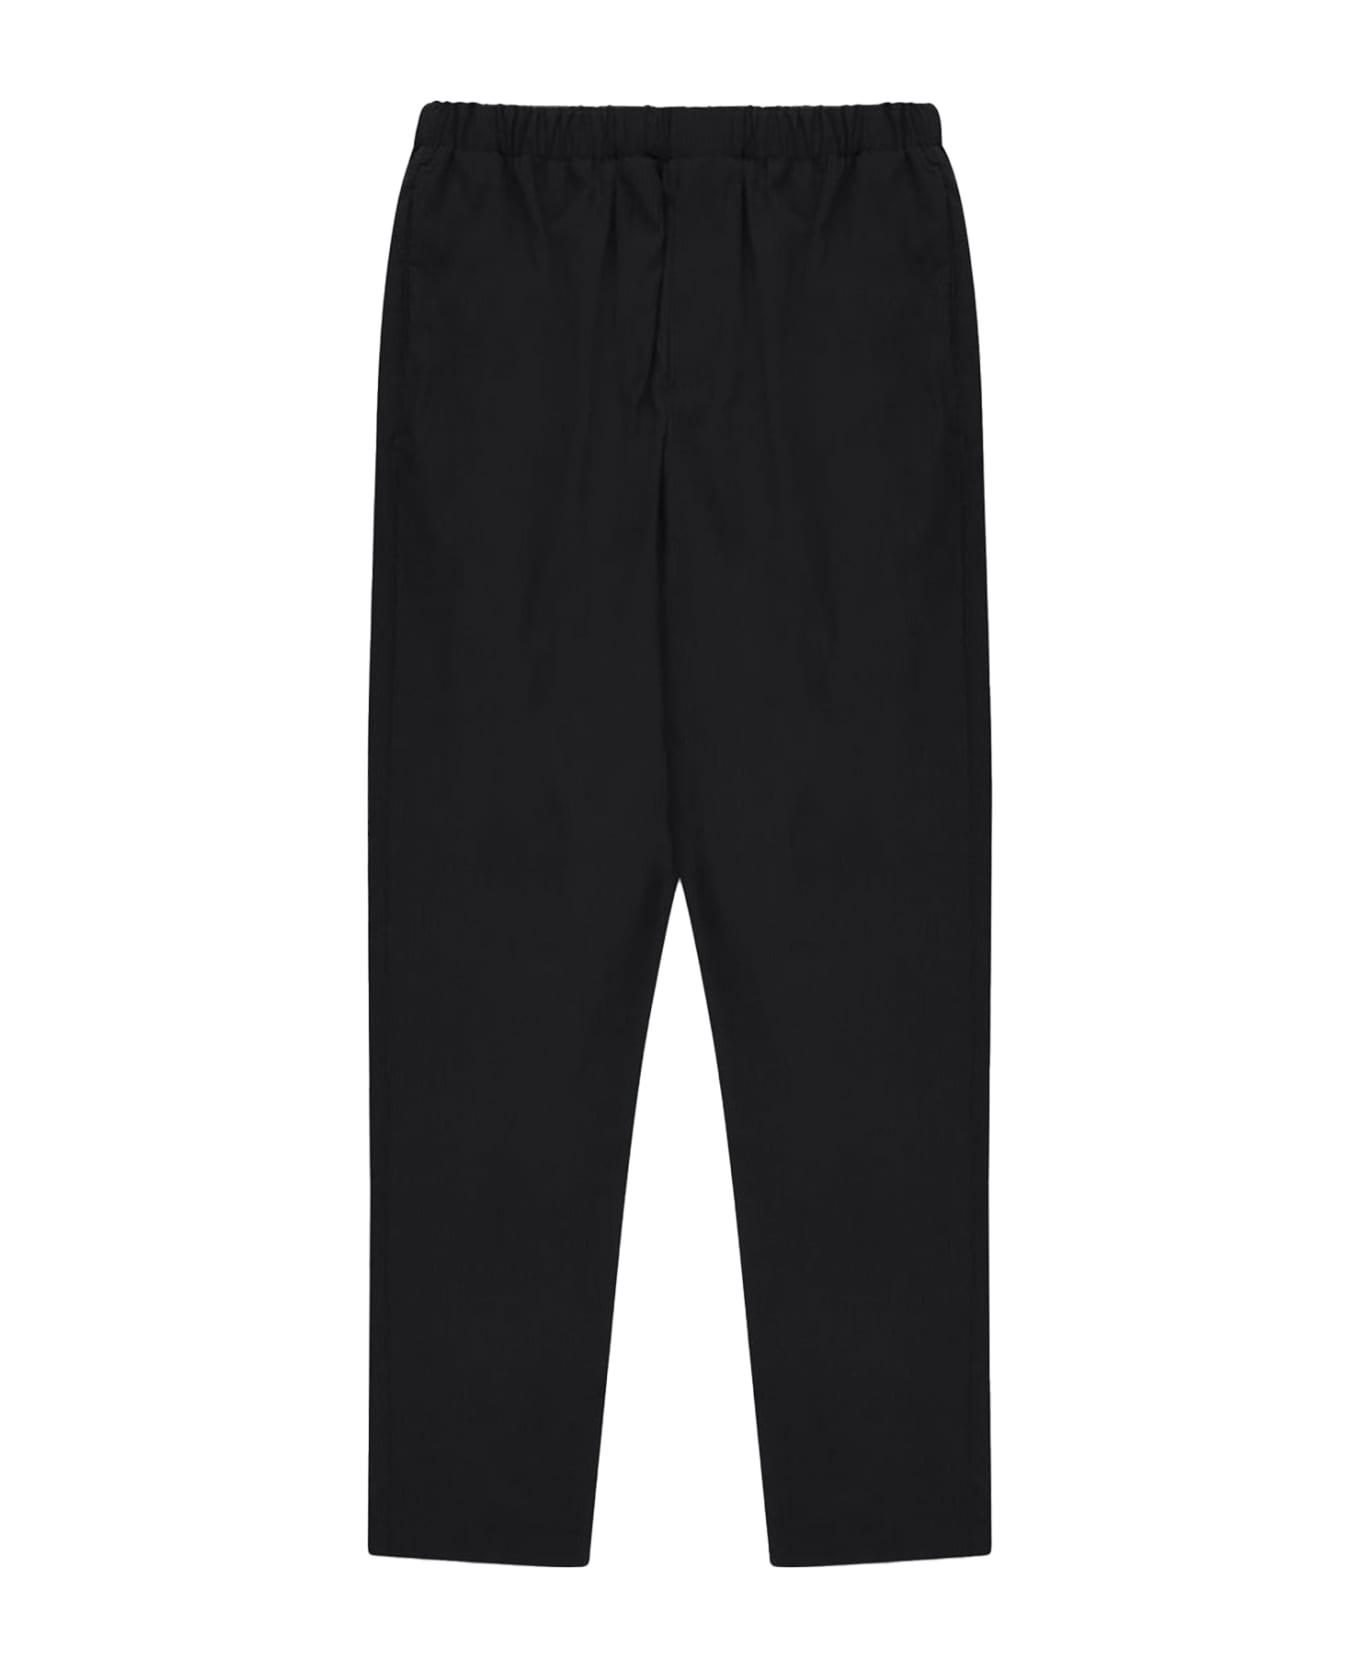 Cruna Black Linen Blend Trousers - NERO